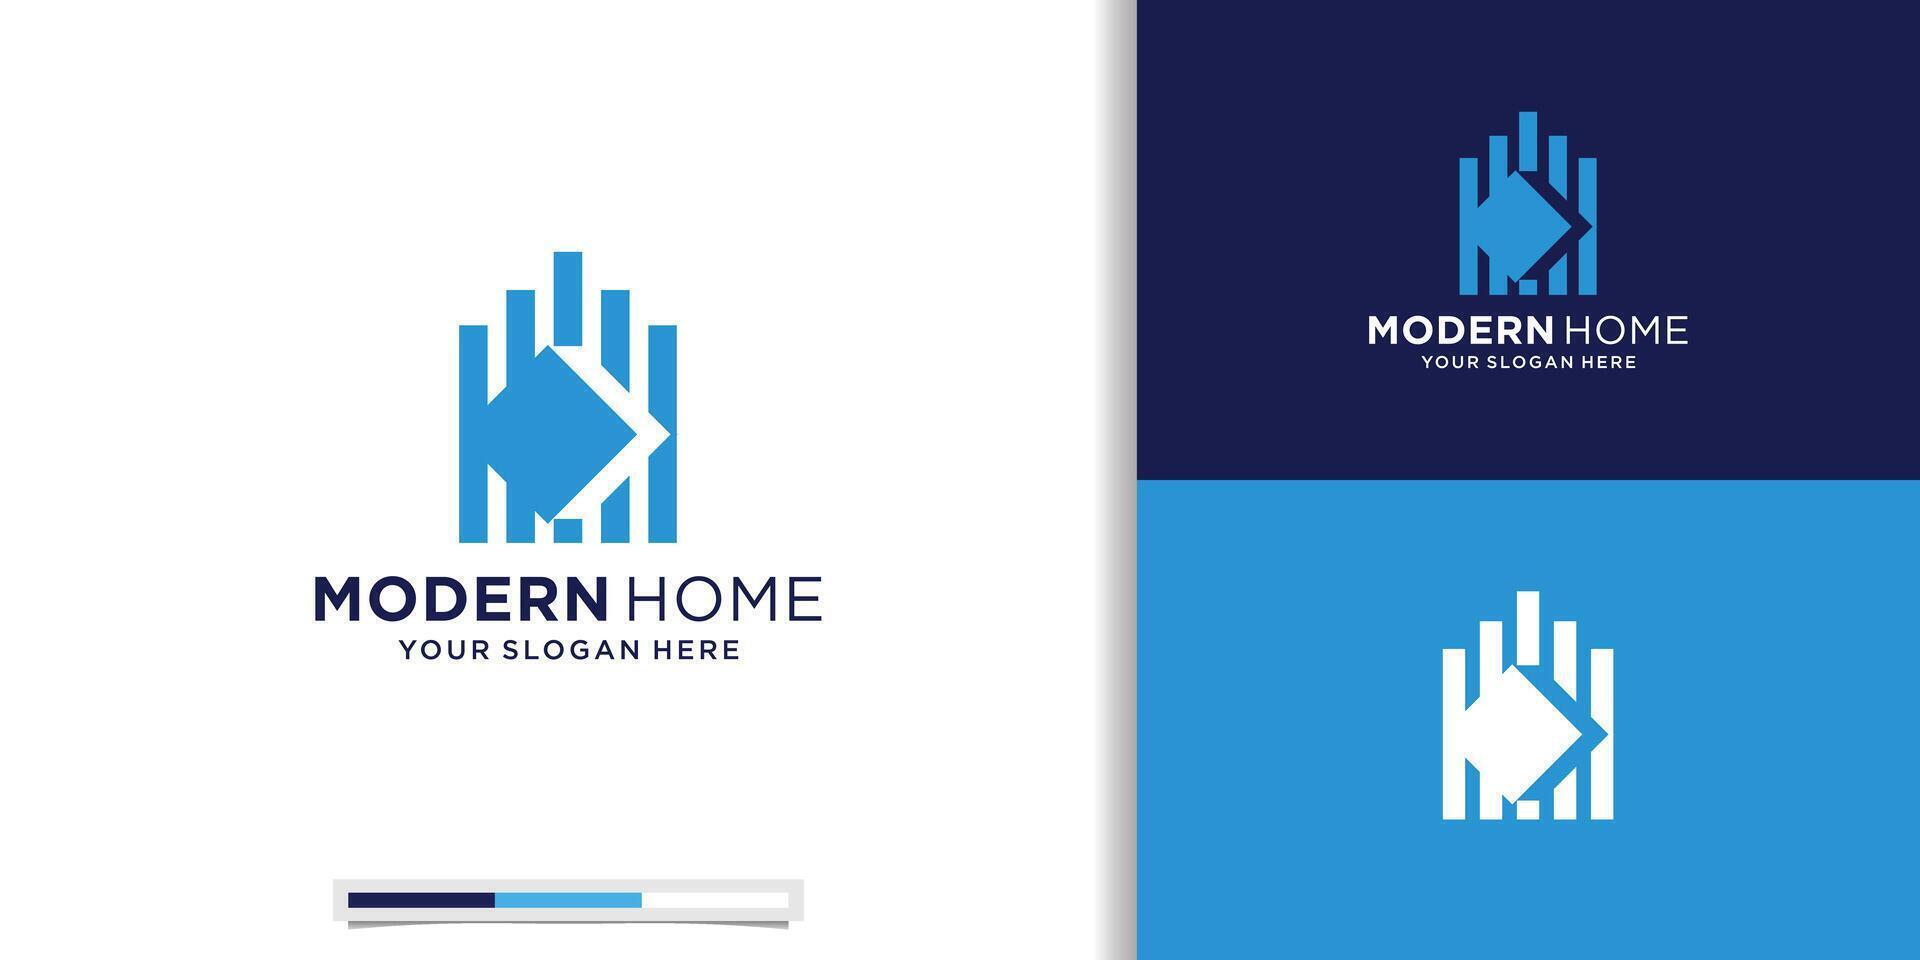 moderno hogar con línea futuro y adelante estilo logo diseño inspiración. símbolo para corporativo negocio vector